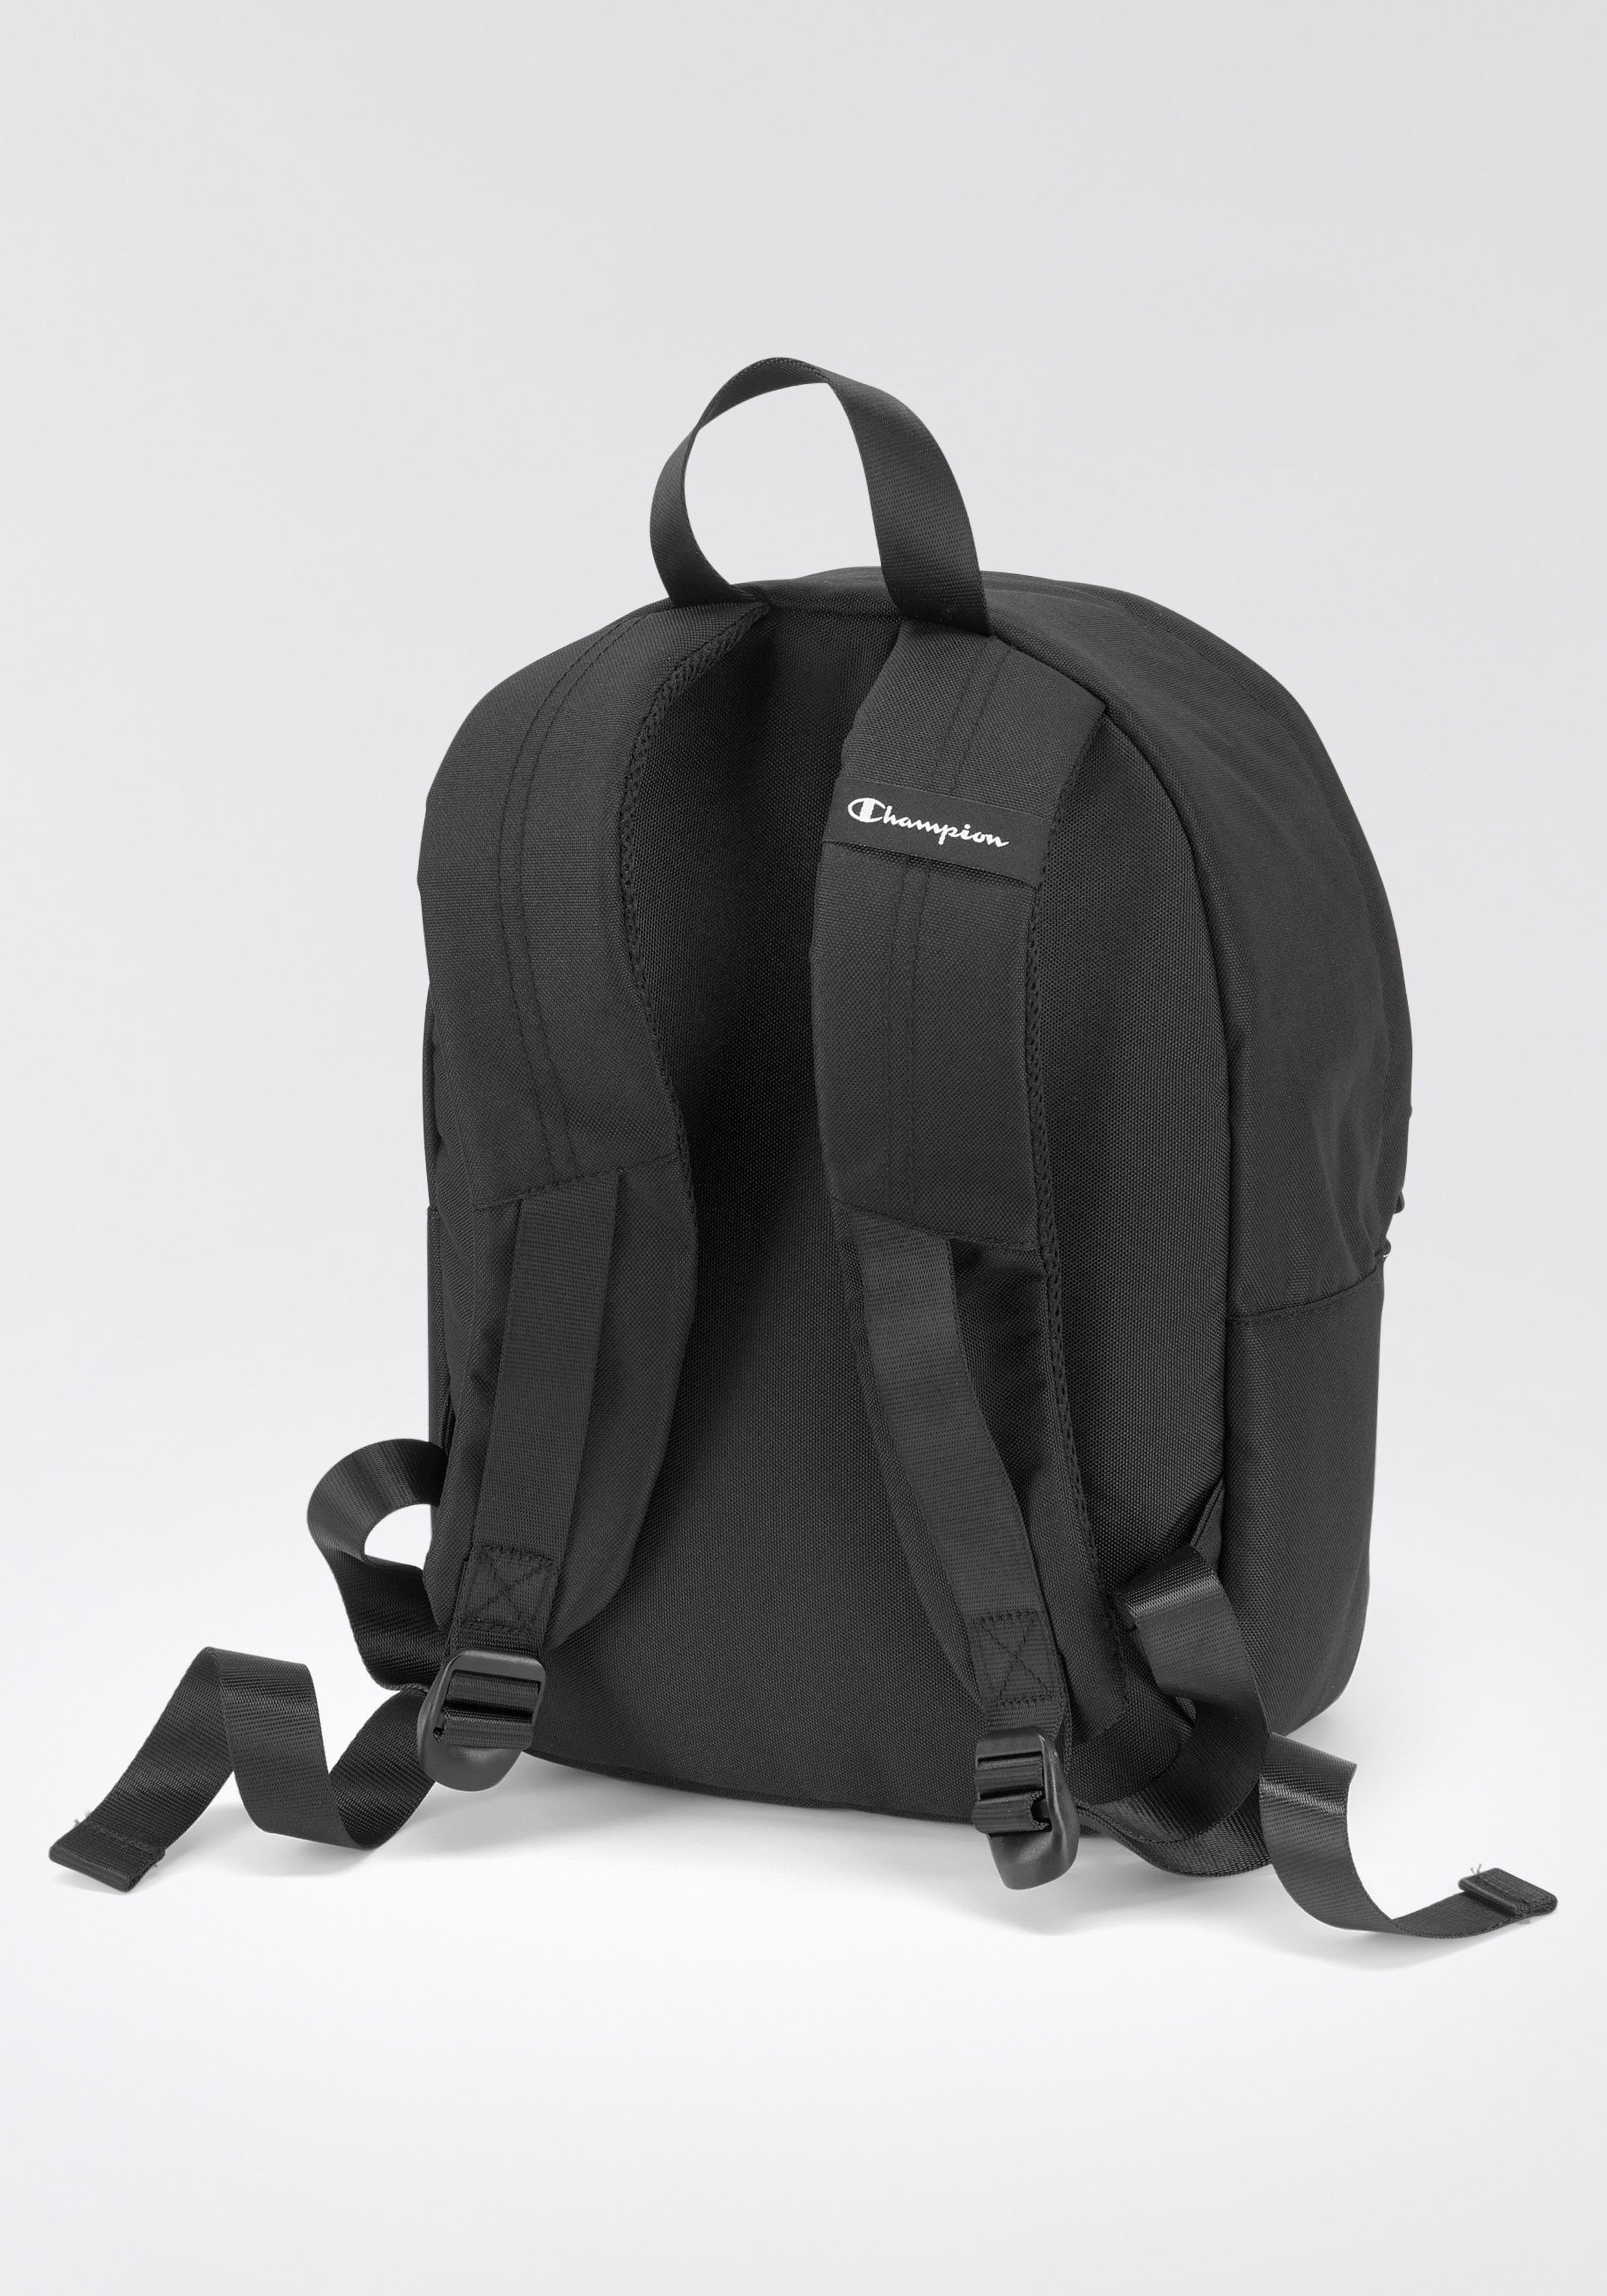 Backpack für - Champion Kinder Small Rucksack